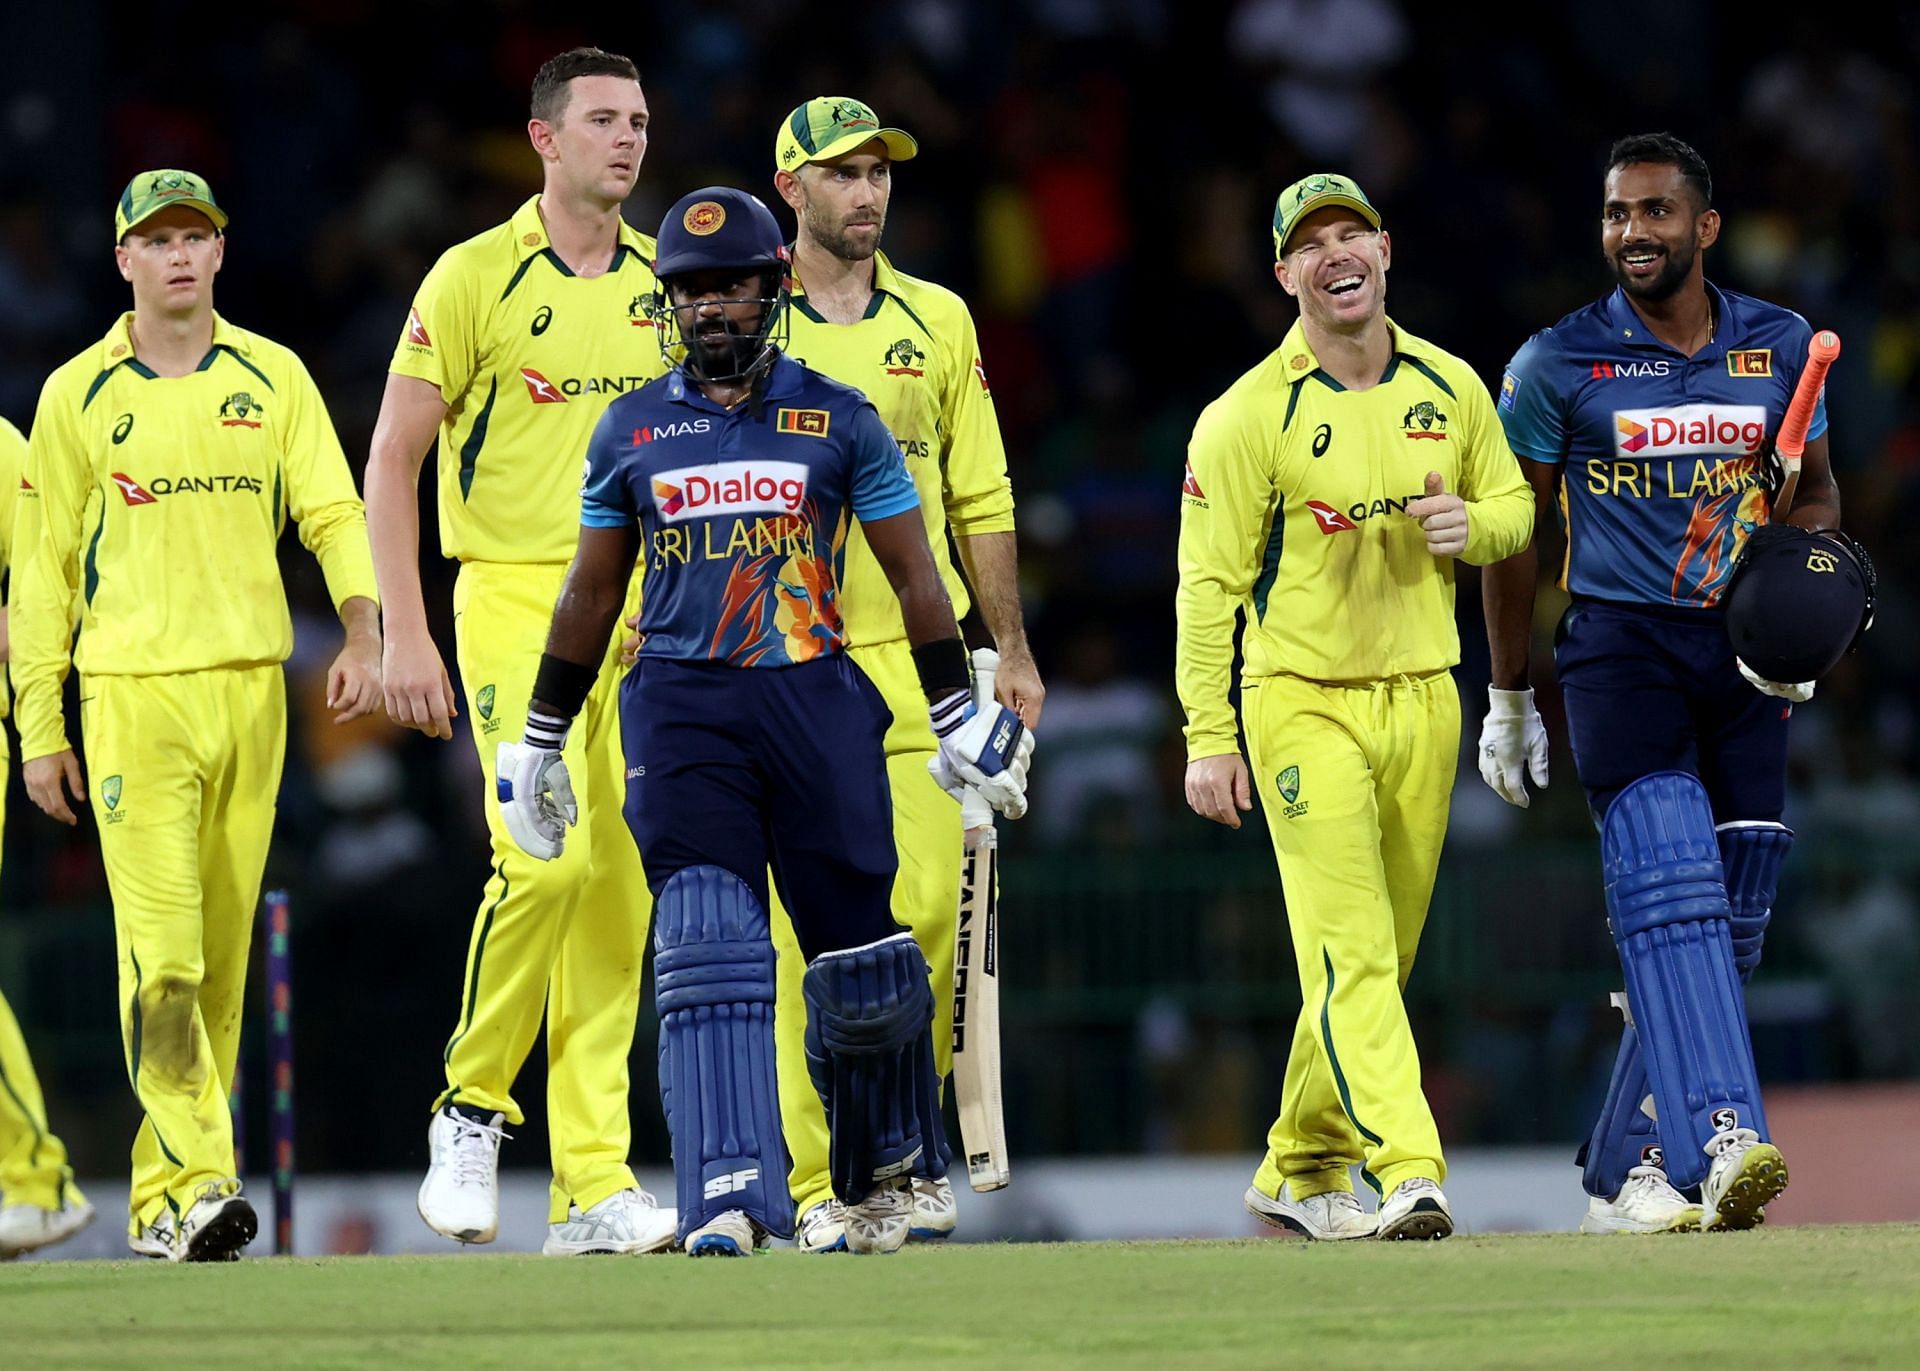 Sri Lankan batsmen walk back after completing a win over Australia in the third ODI